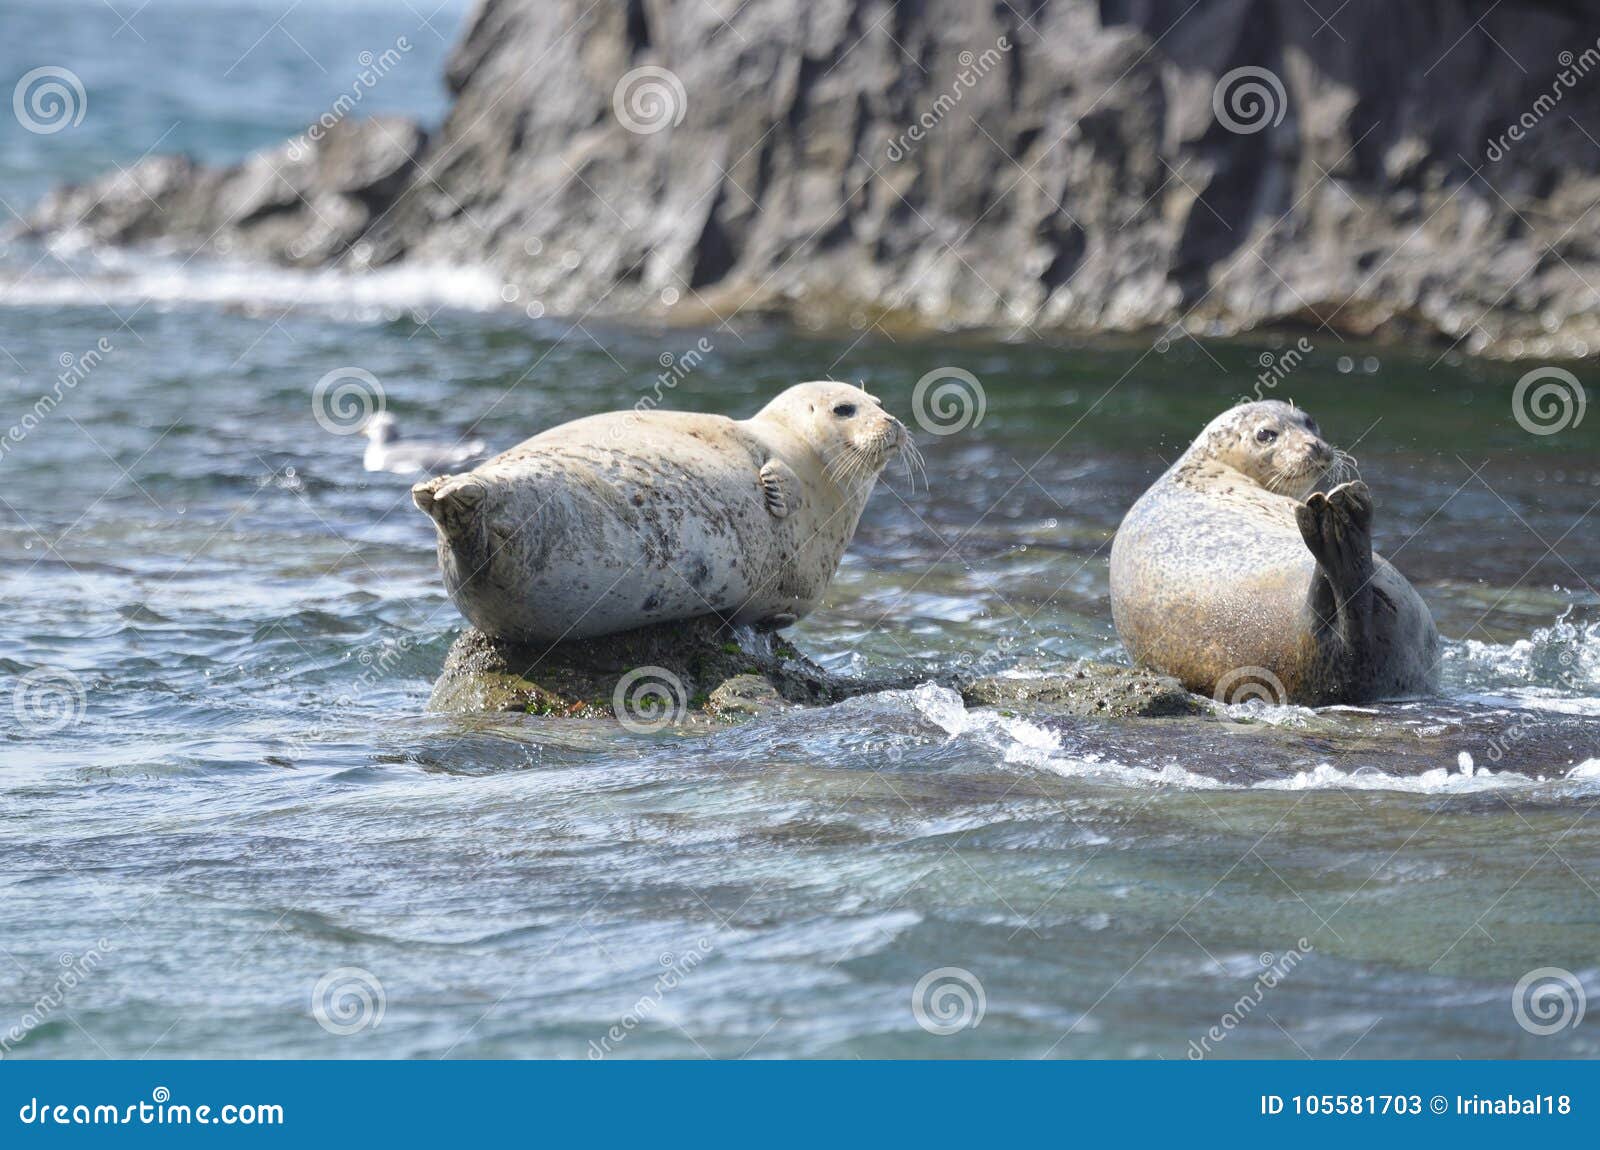 rookery of larga seals on the rocks in the sea of japan. archipelago rimsky korsakov